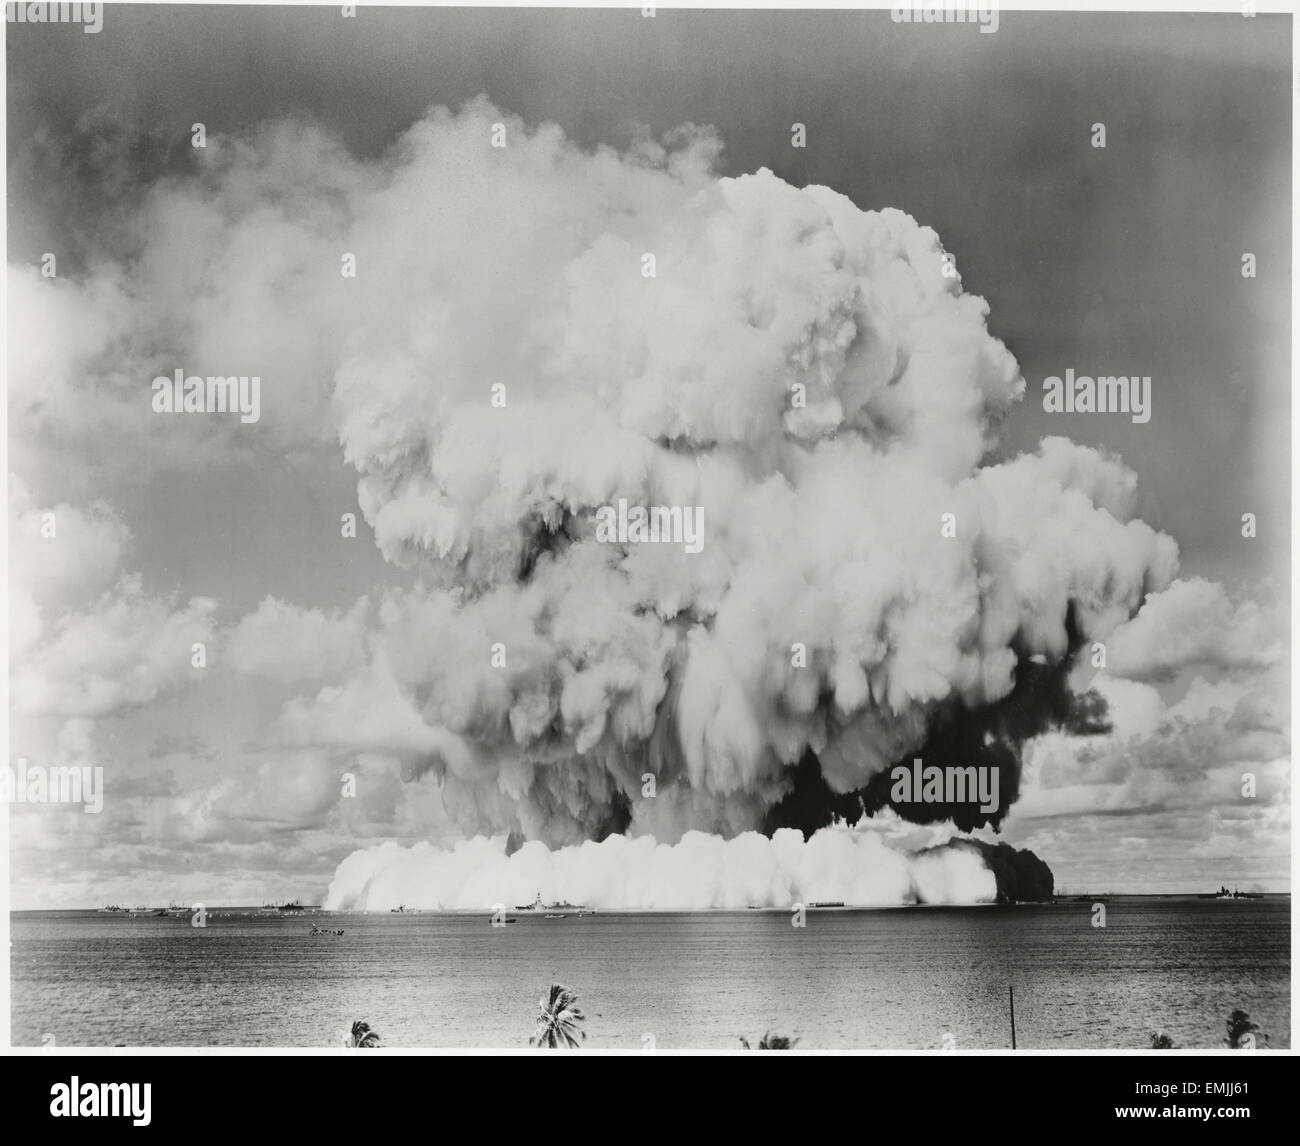 US-Militär Atombombe Test und daraus resultierende Explosion, Kreuzung Ziel Flotte, Bikini-Insel, Pazifik, 1946 Stockfoto